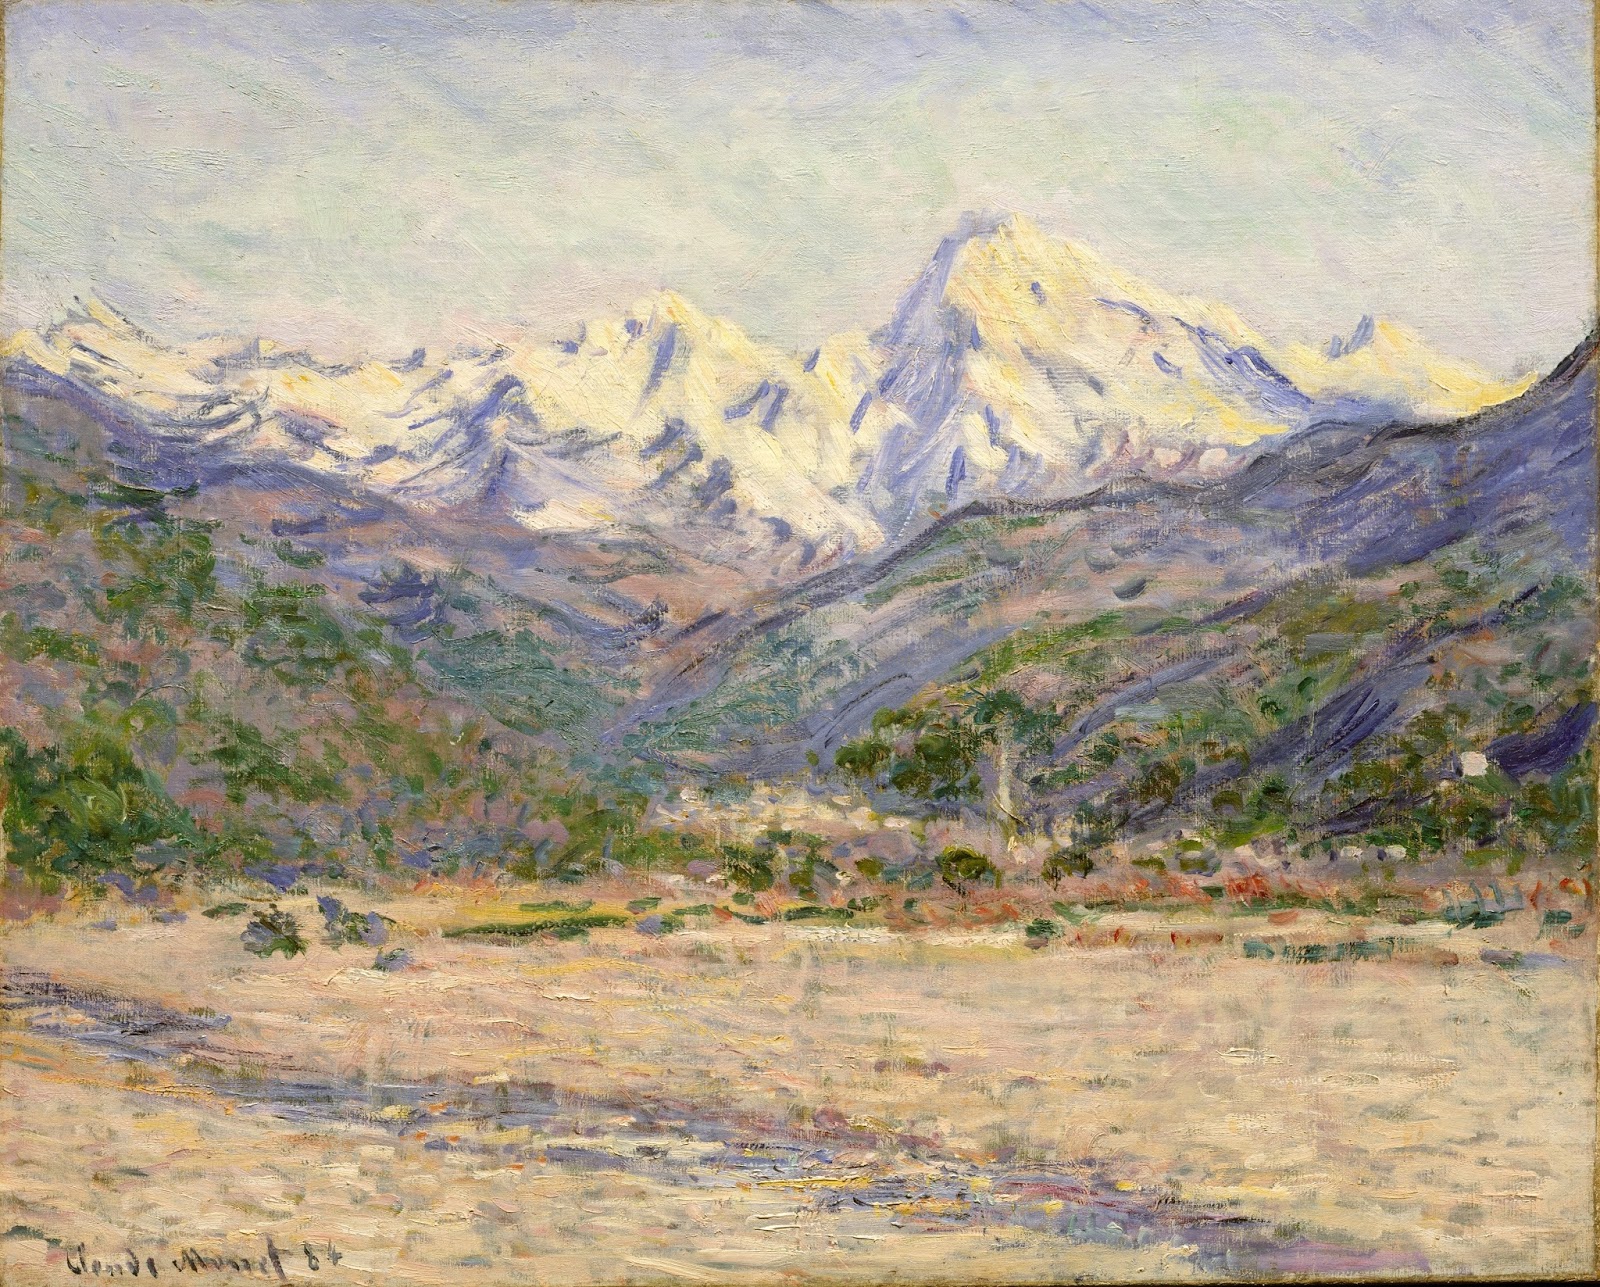 Claude+Monet-1840-1926 (831).jpg